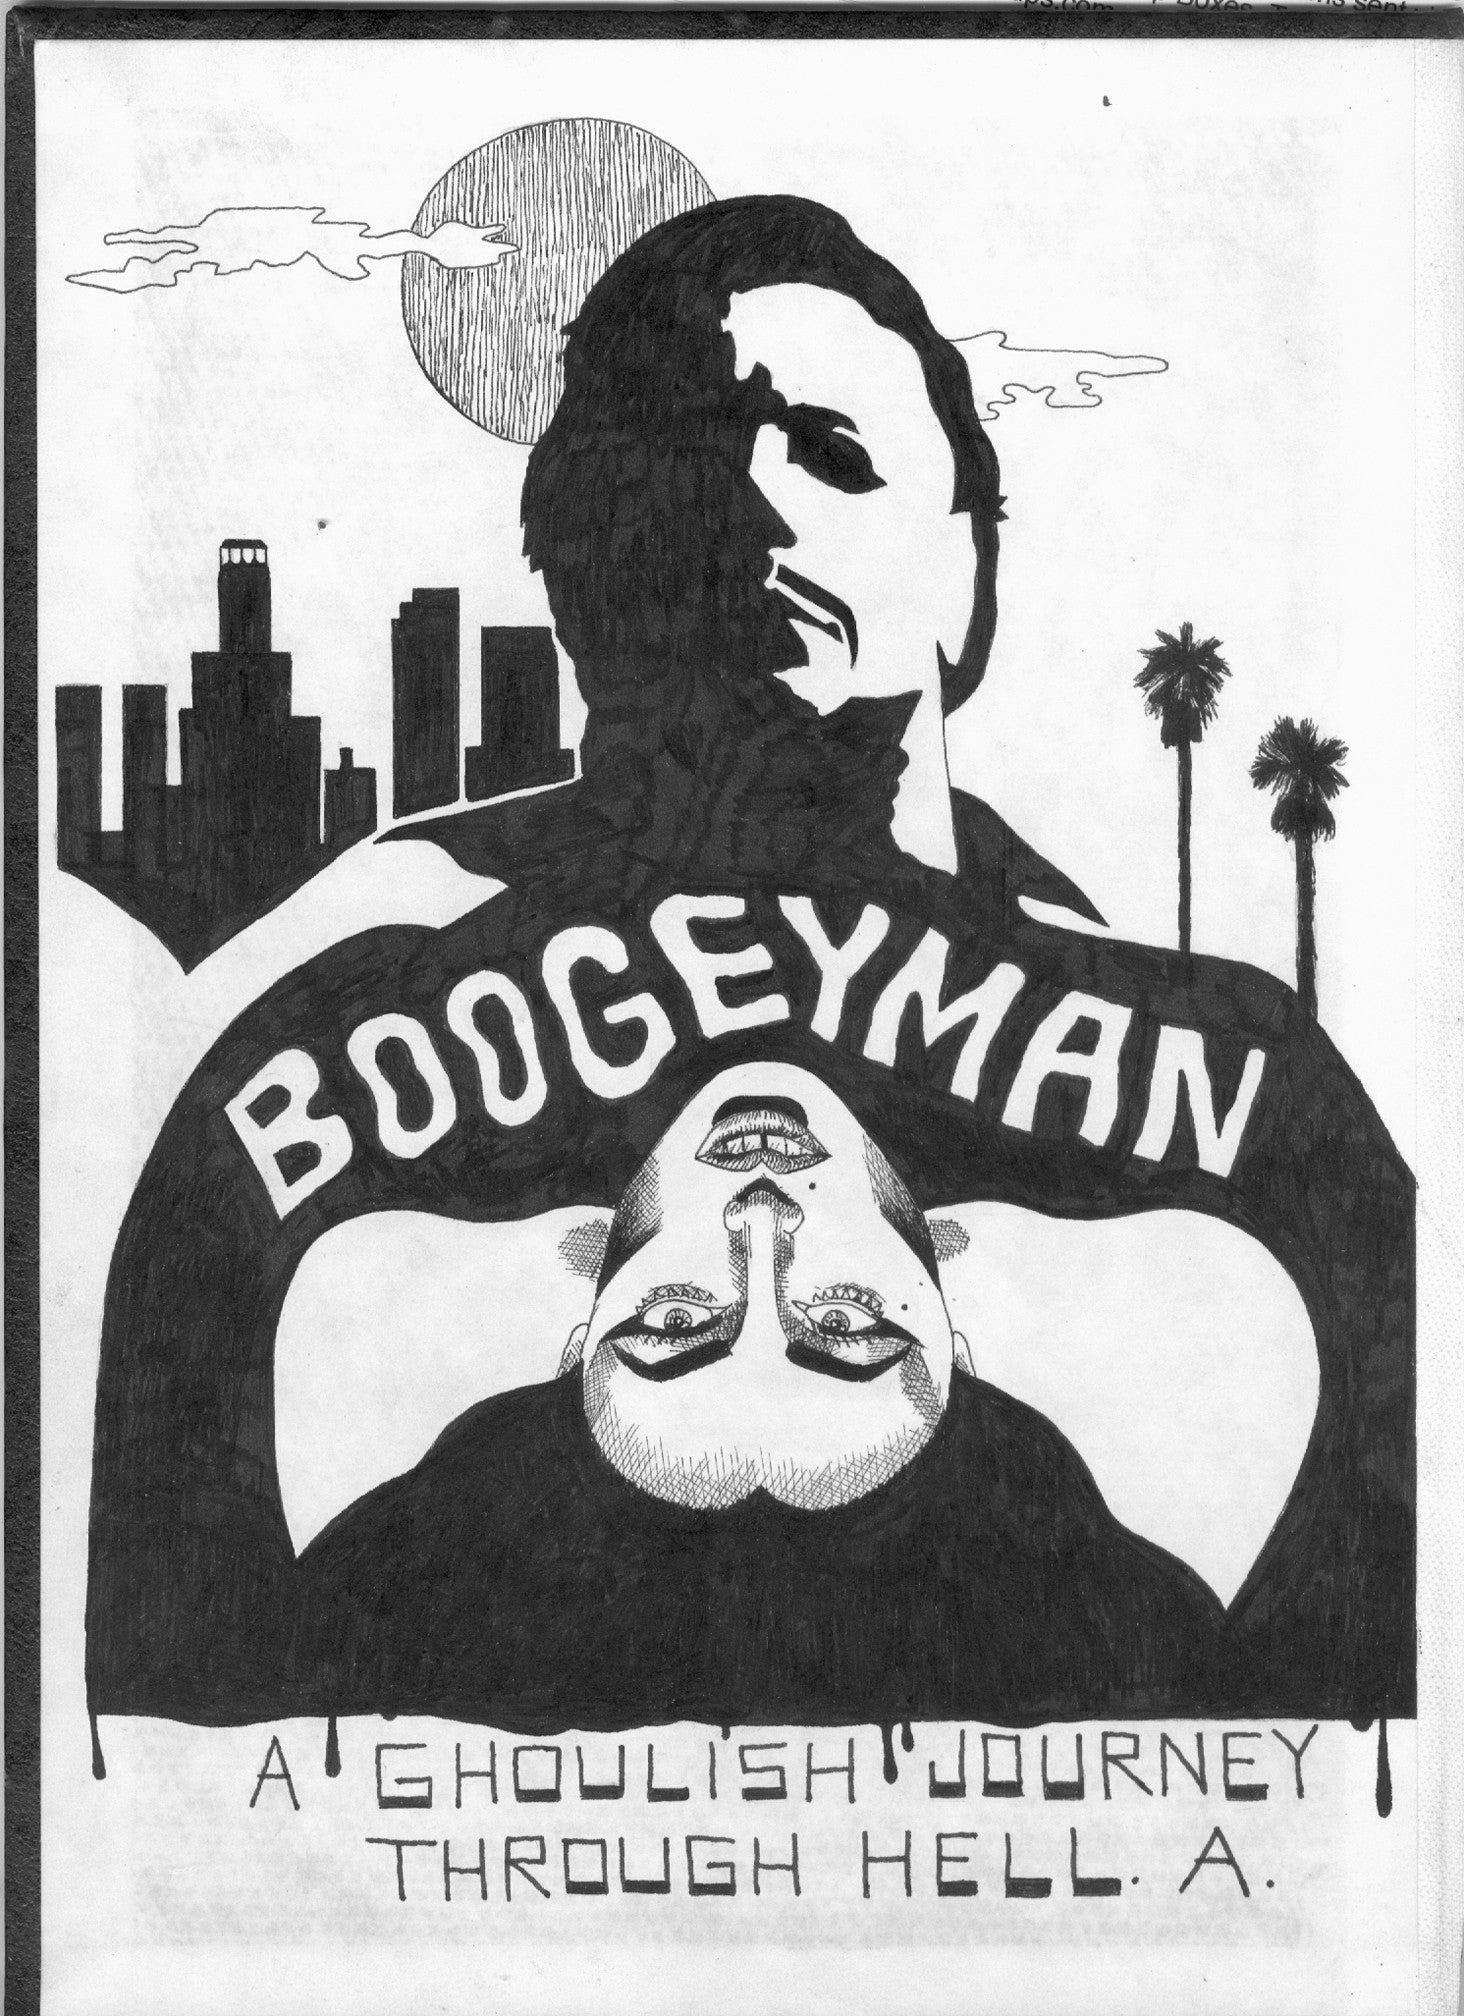 ALBERT REYES - "Boogeyman "Drawing